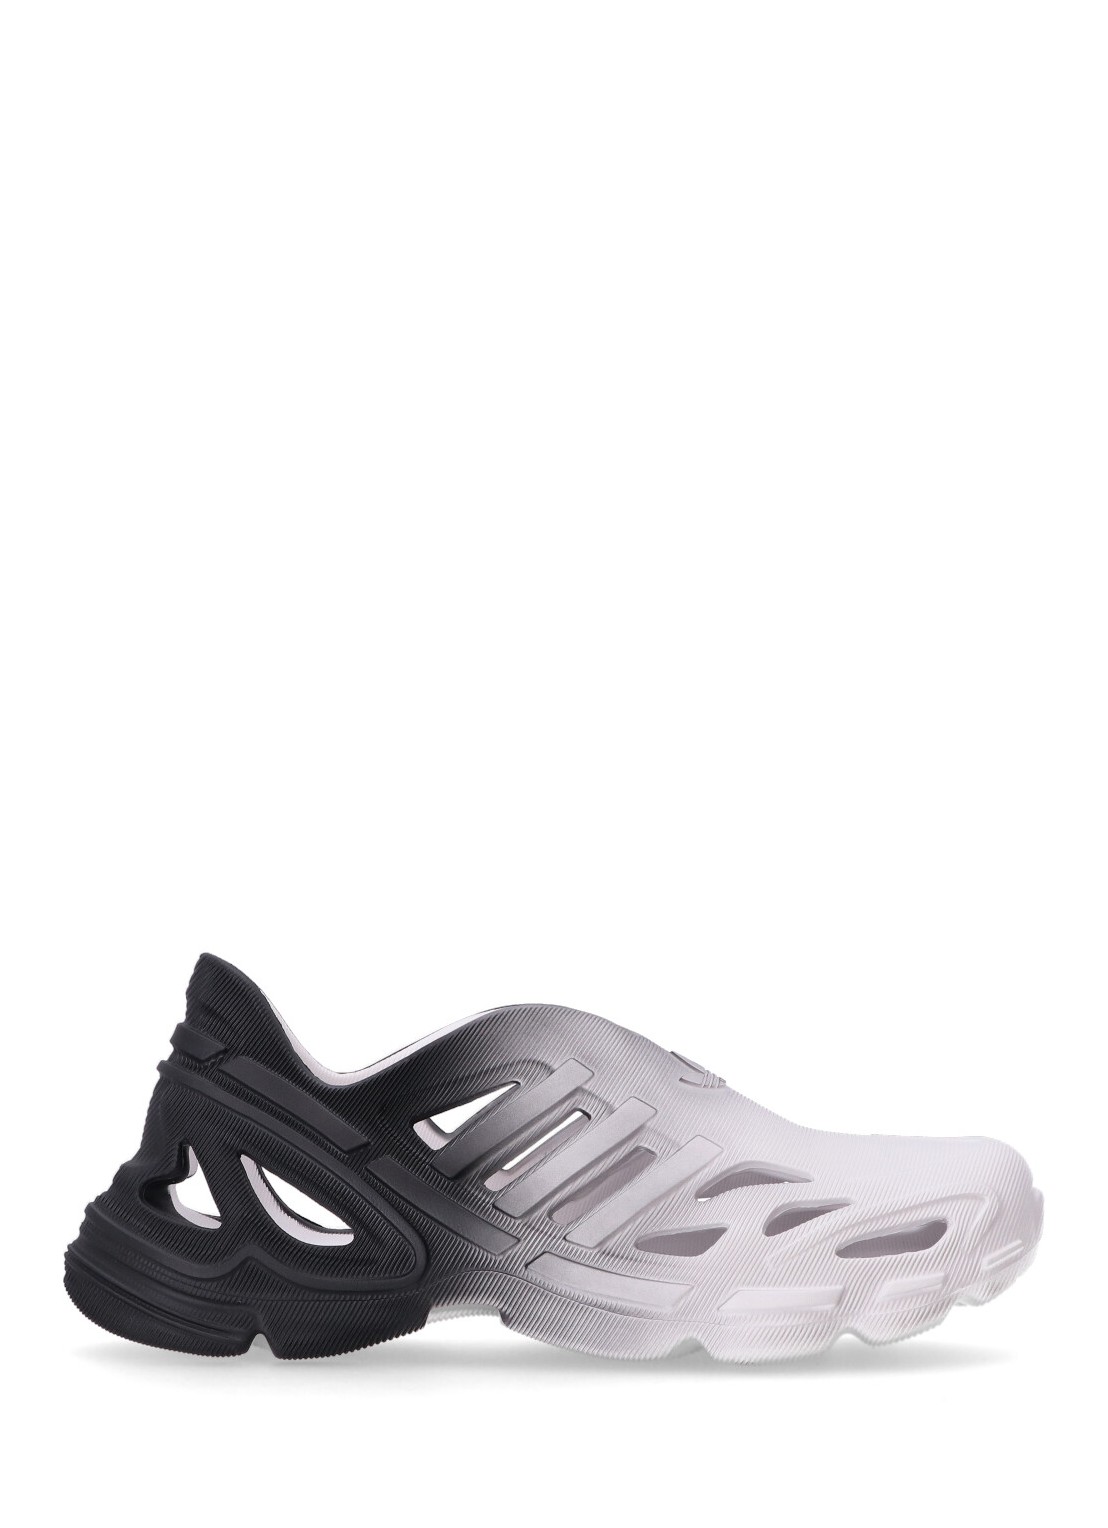 Sneaker adidas originals sneaker manadifom supernova - if3961 crywht cblack cblack talla 43
 